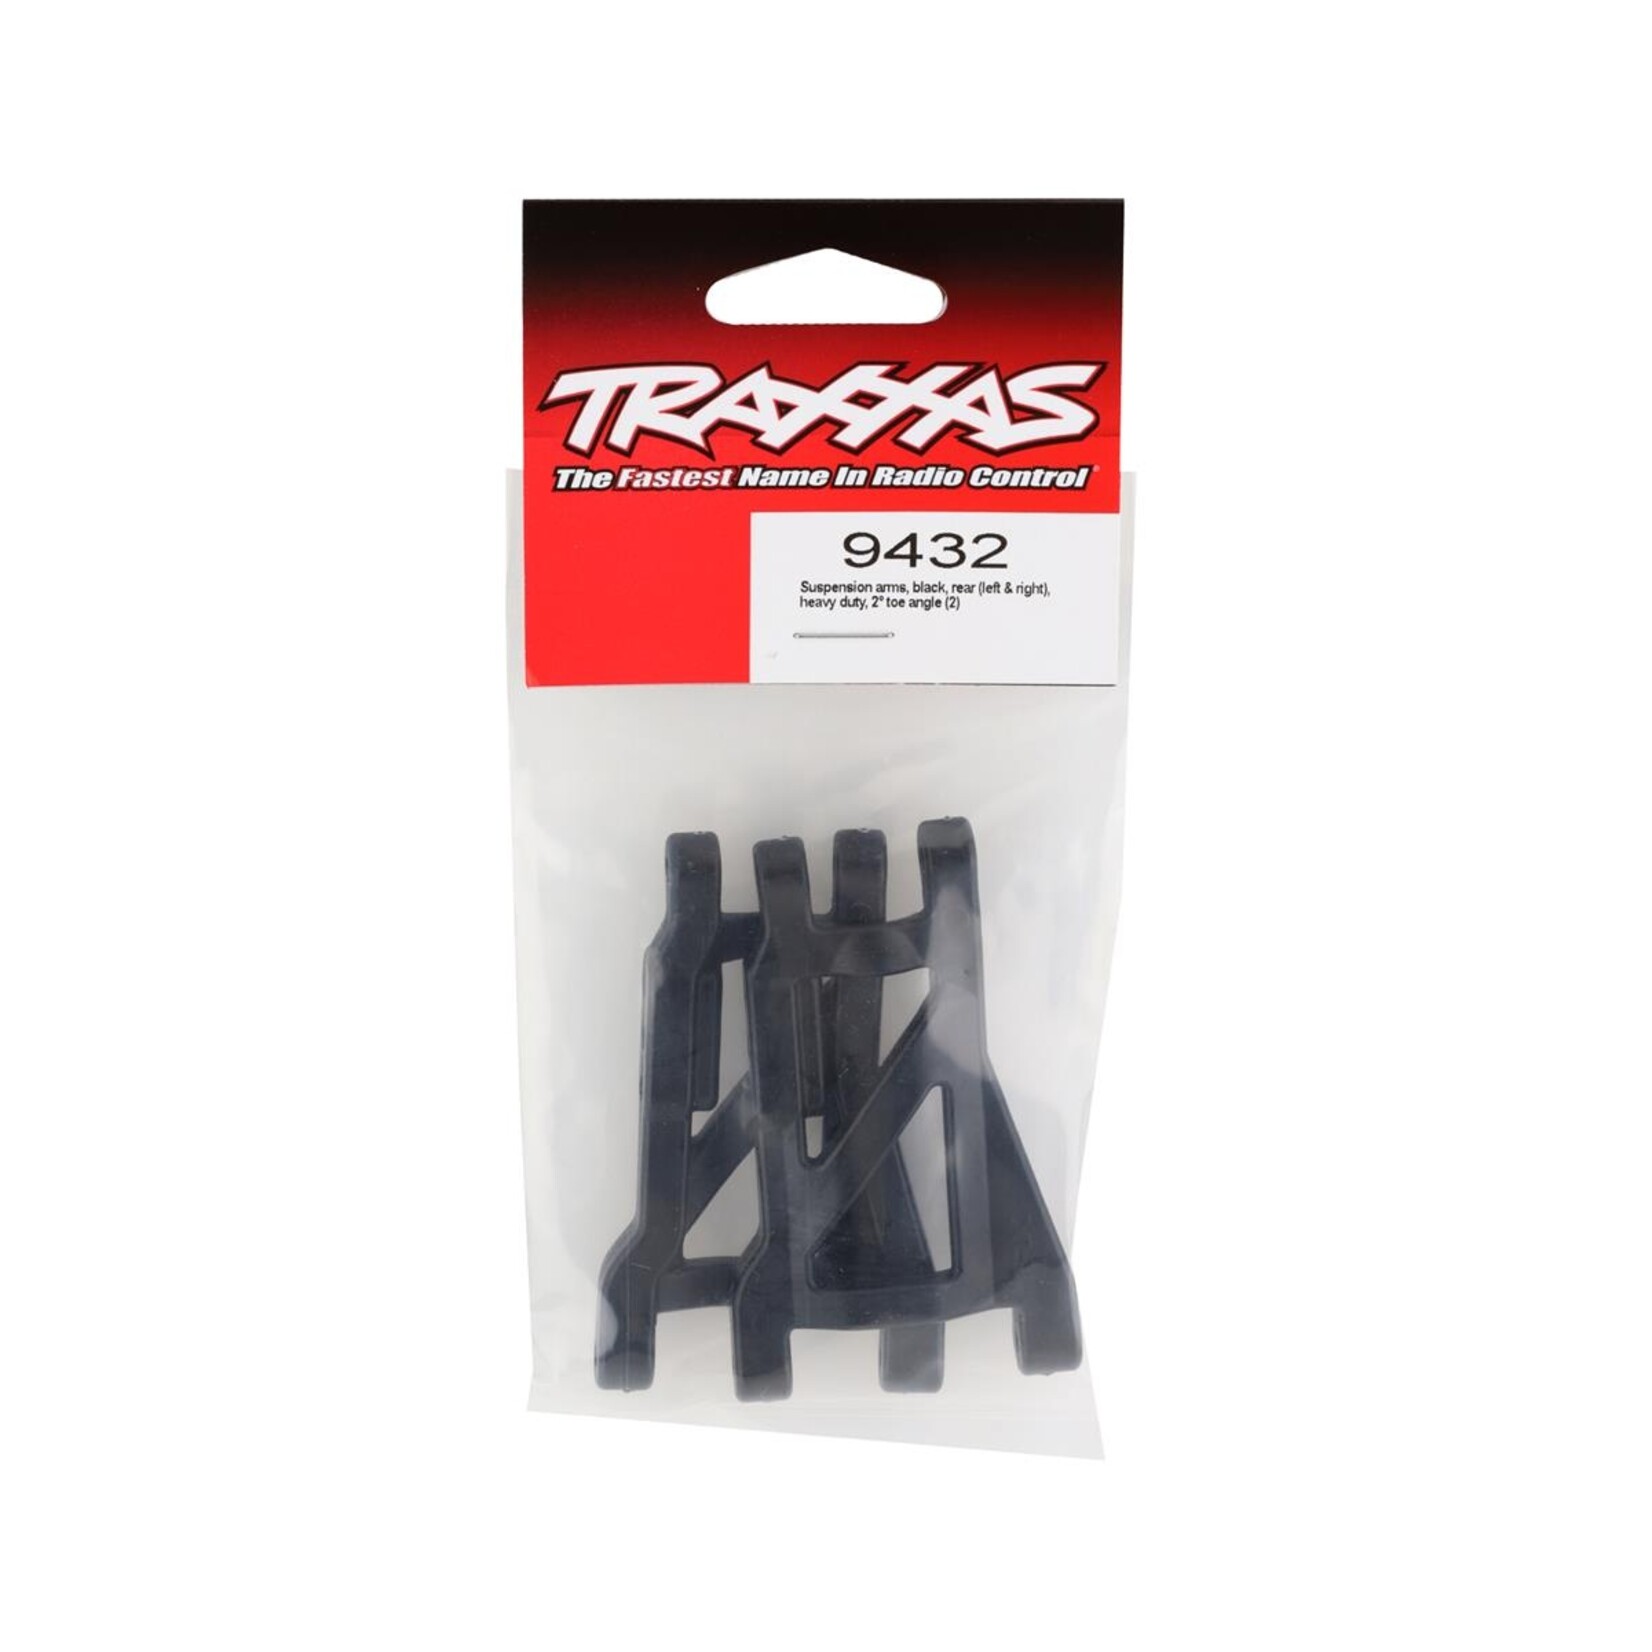 Traxxas Traxxas Drag Slash Rear Heavy Duty Suspension Arms (Black) (2) (2° Toe-In) #9432